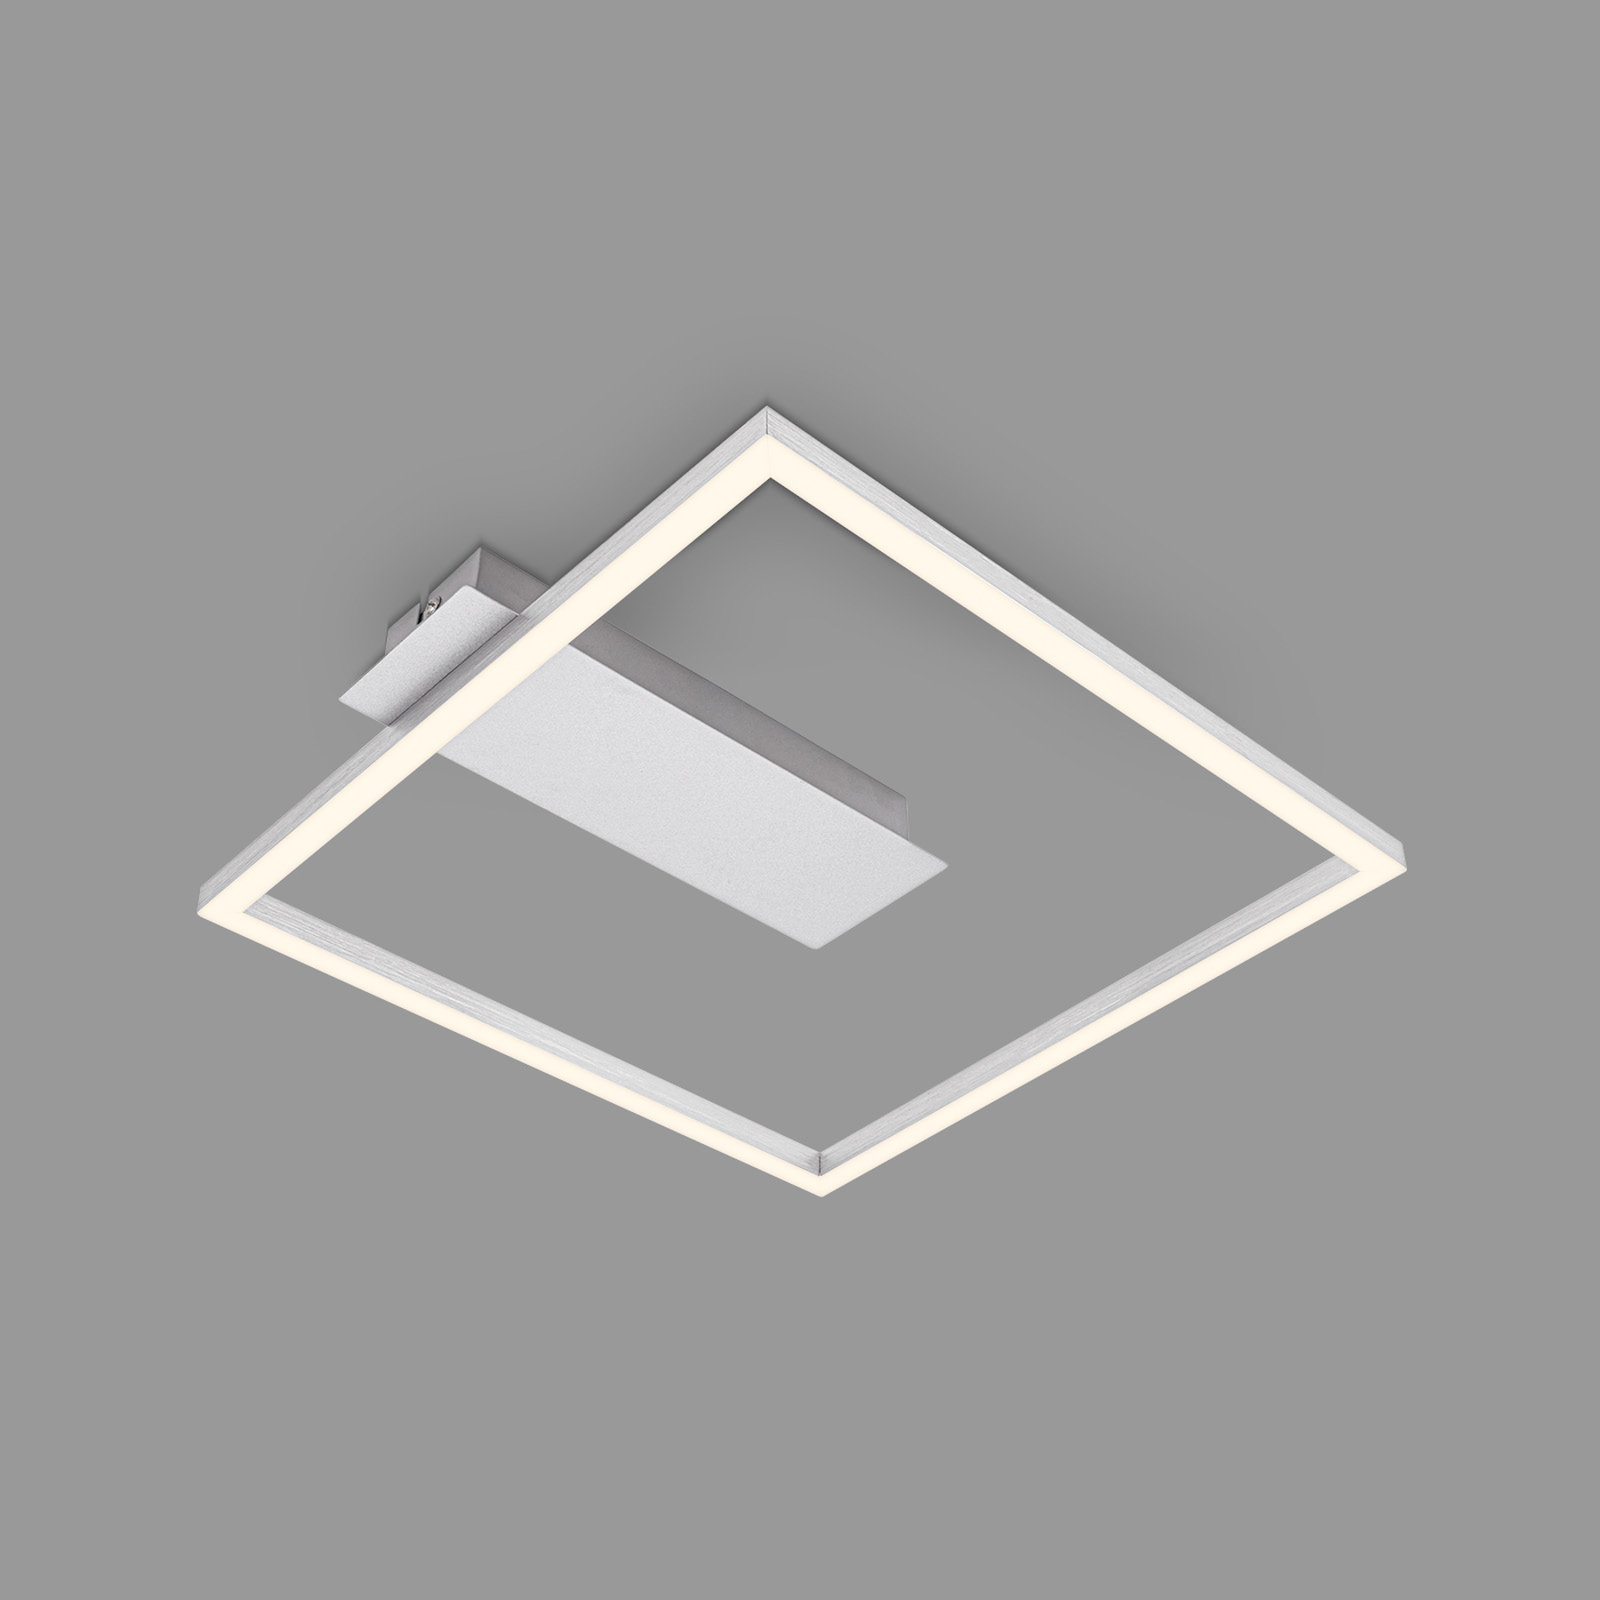 LED plafondlamp 3771 in framevorm, alu